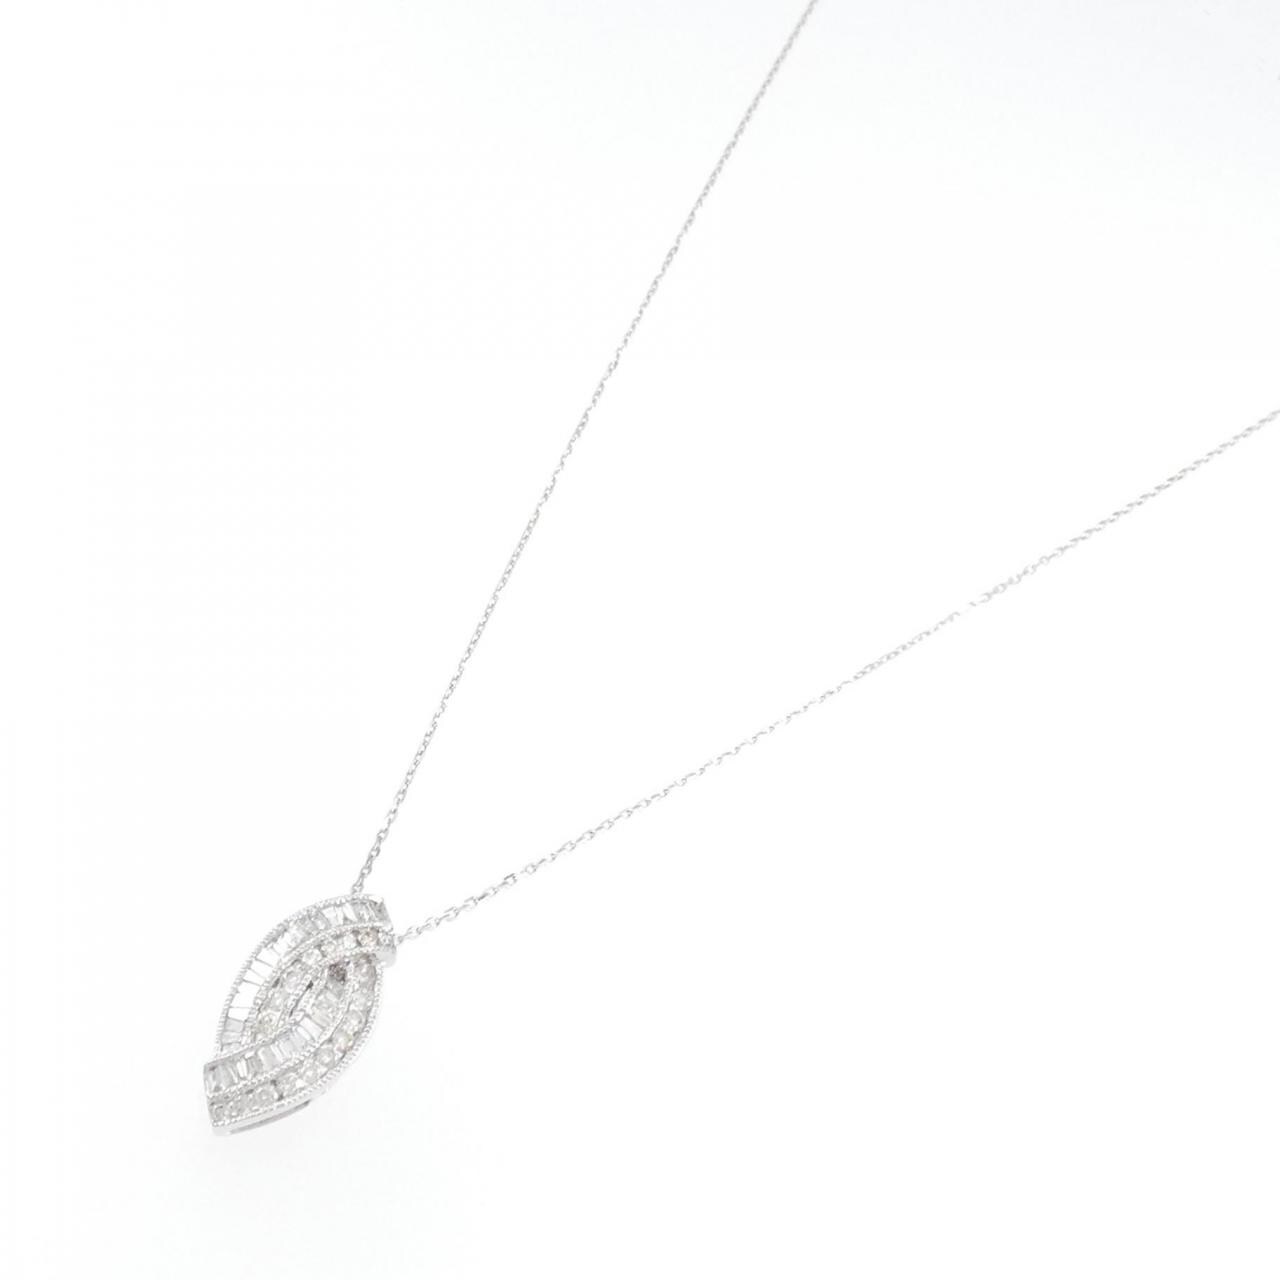 K18WG Diamond necklace